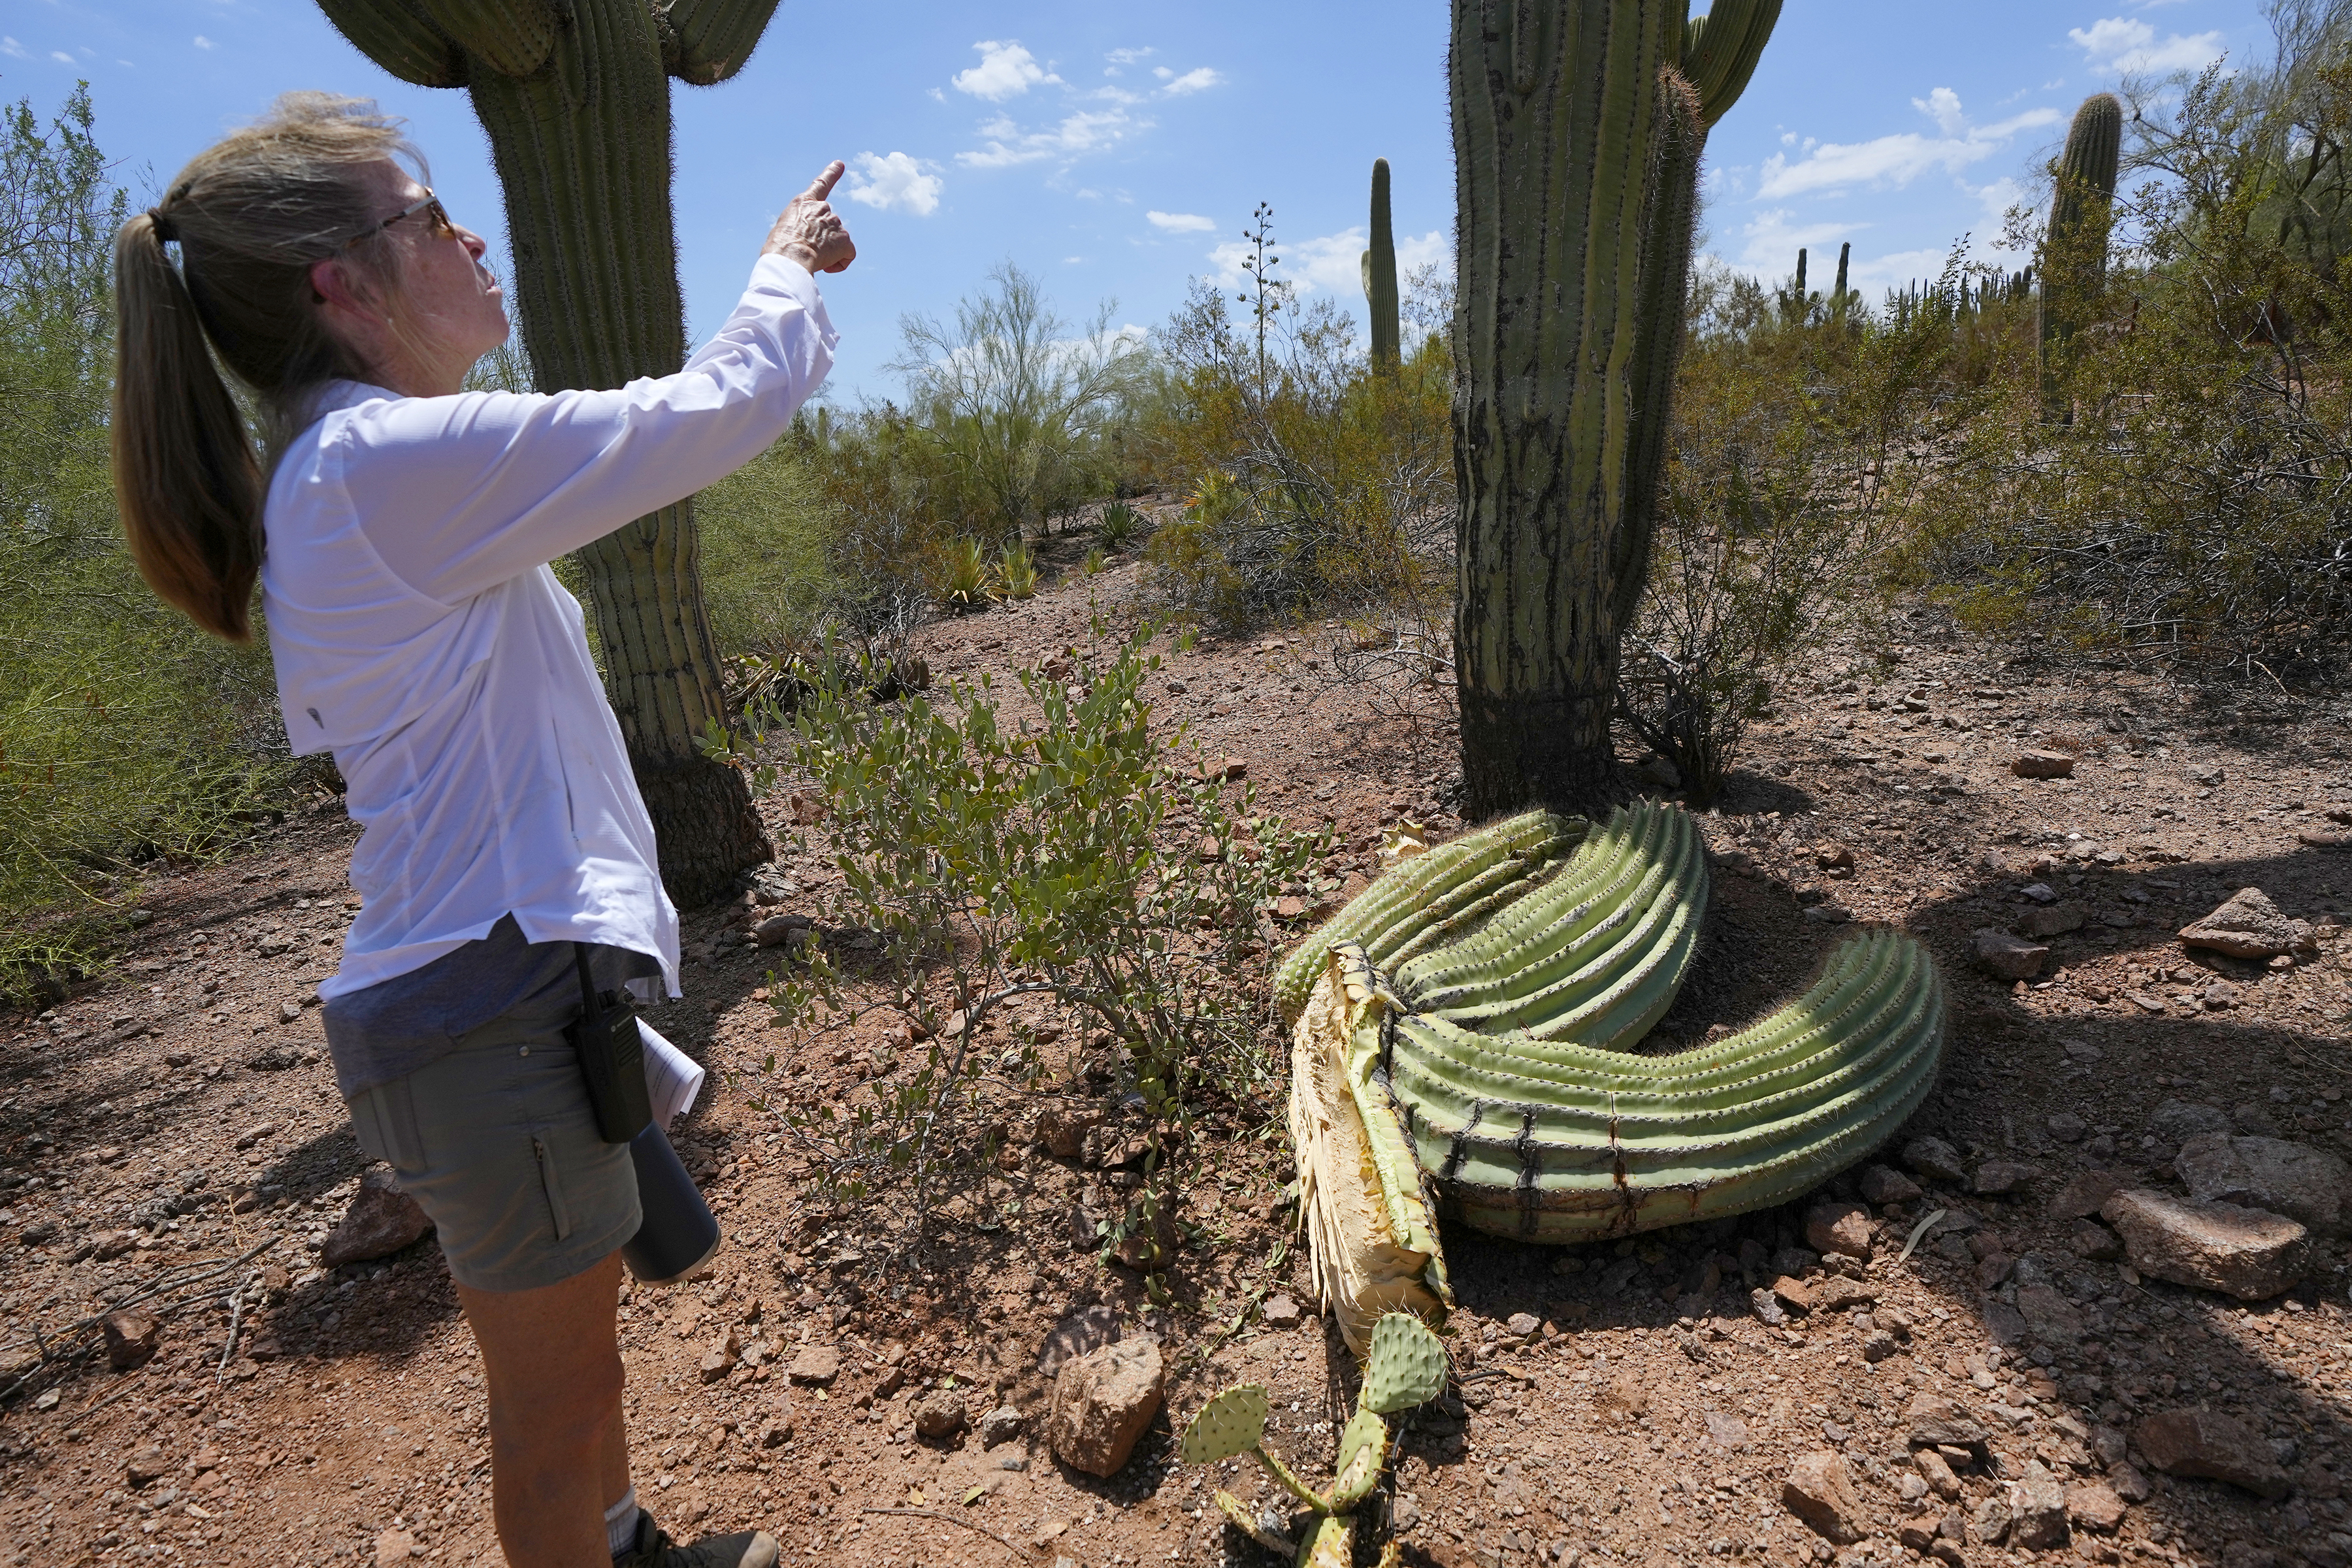 Volunteers plant saguaro cactuses on Bush Fire burn scar near Phoenix